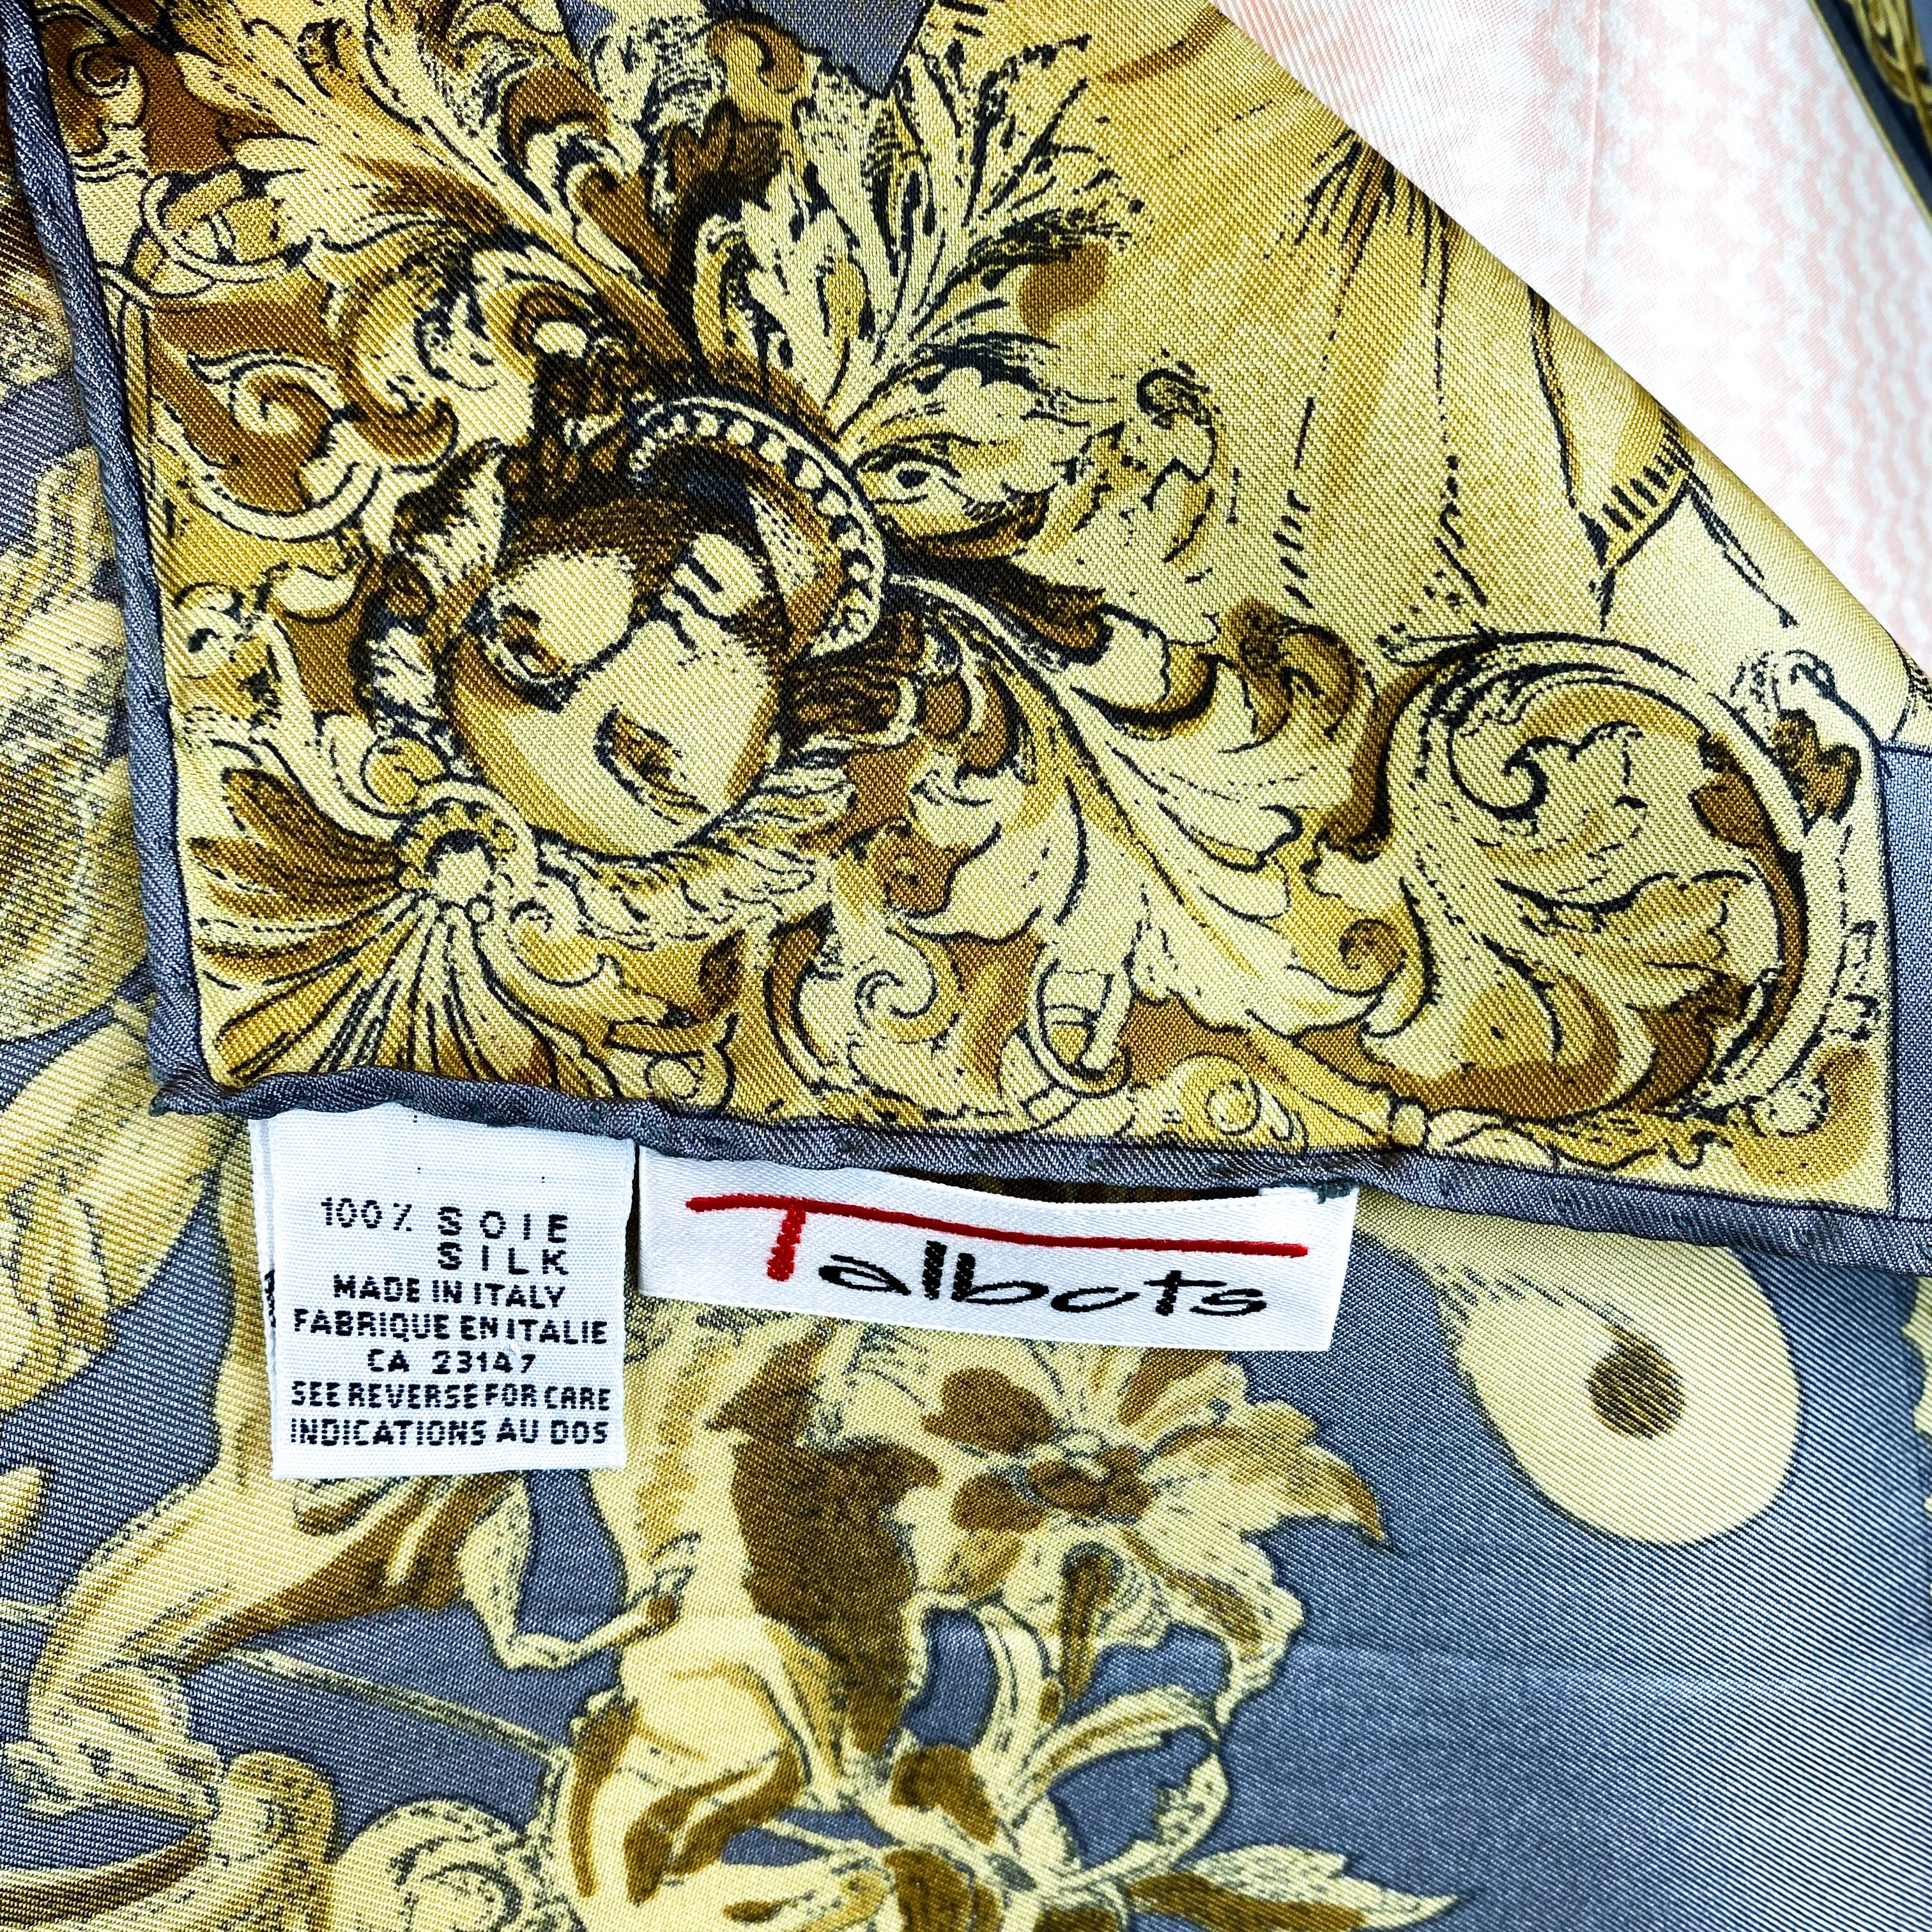 Talbots Classic Vintage Silk Scarf